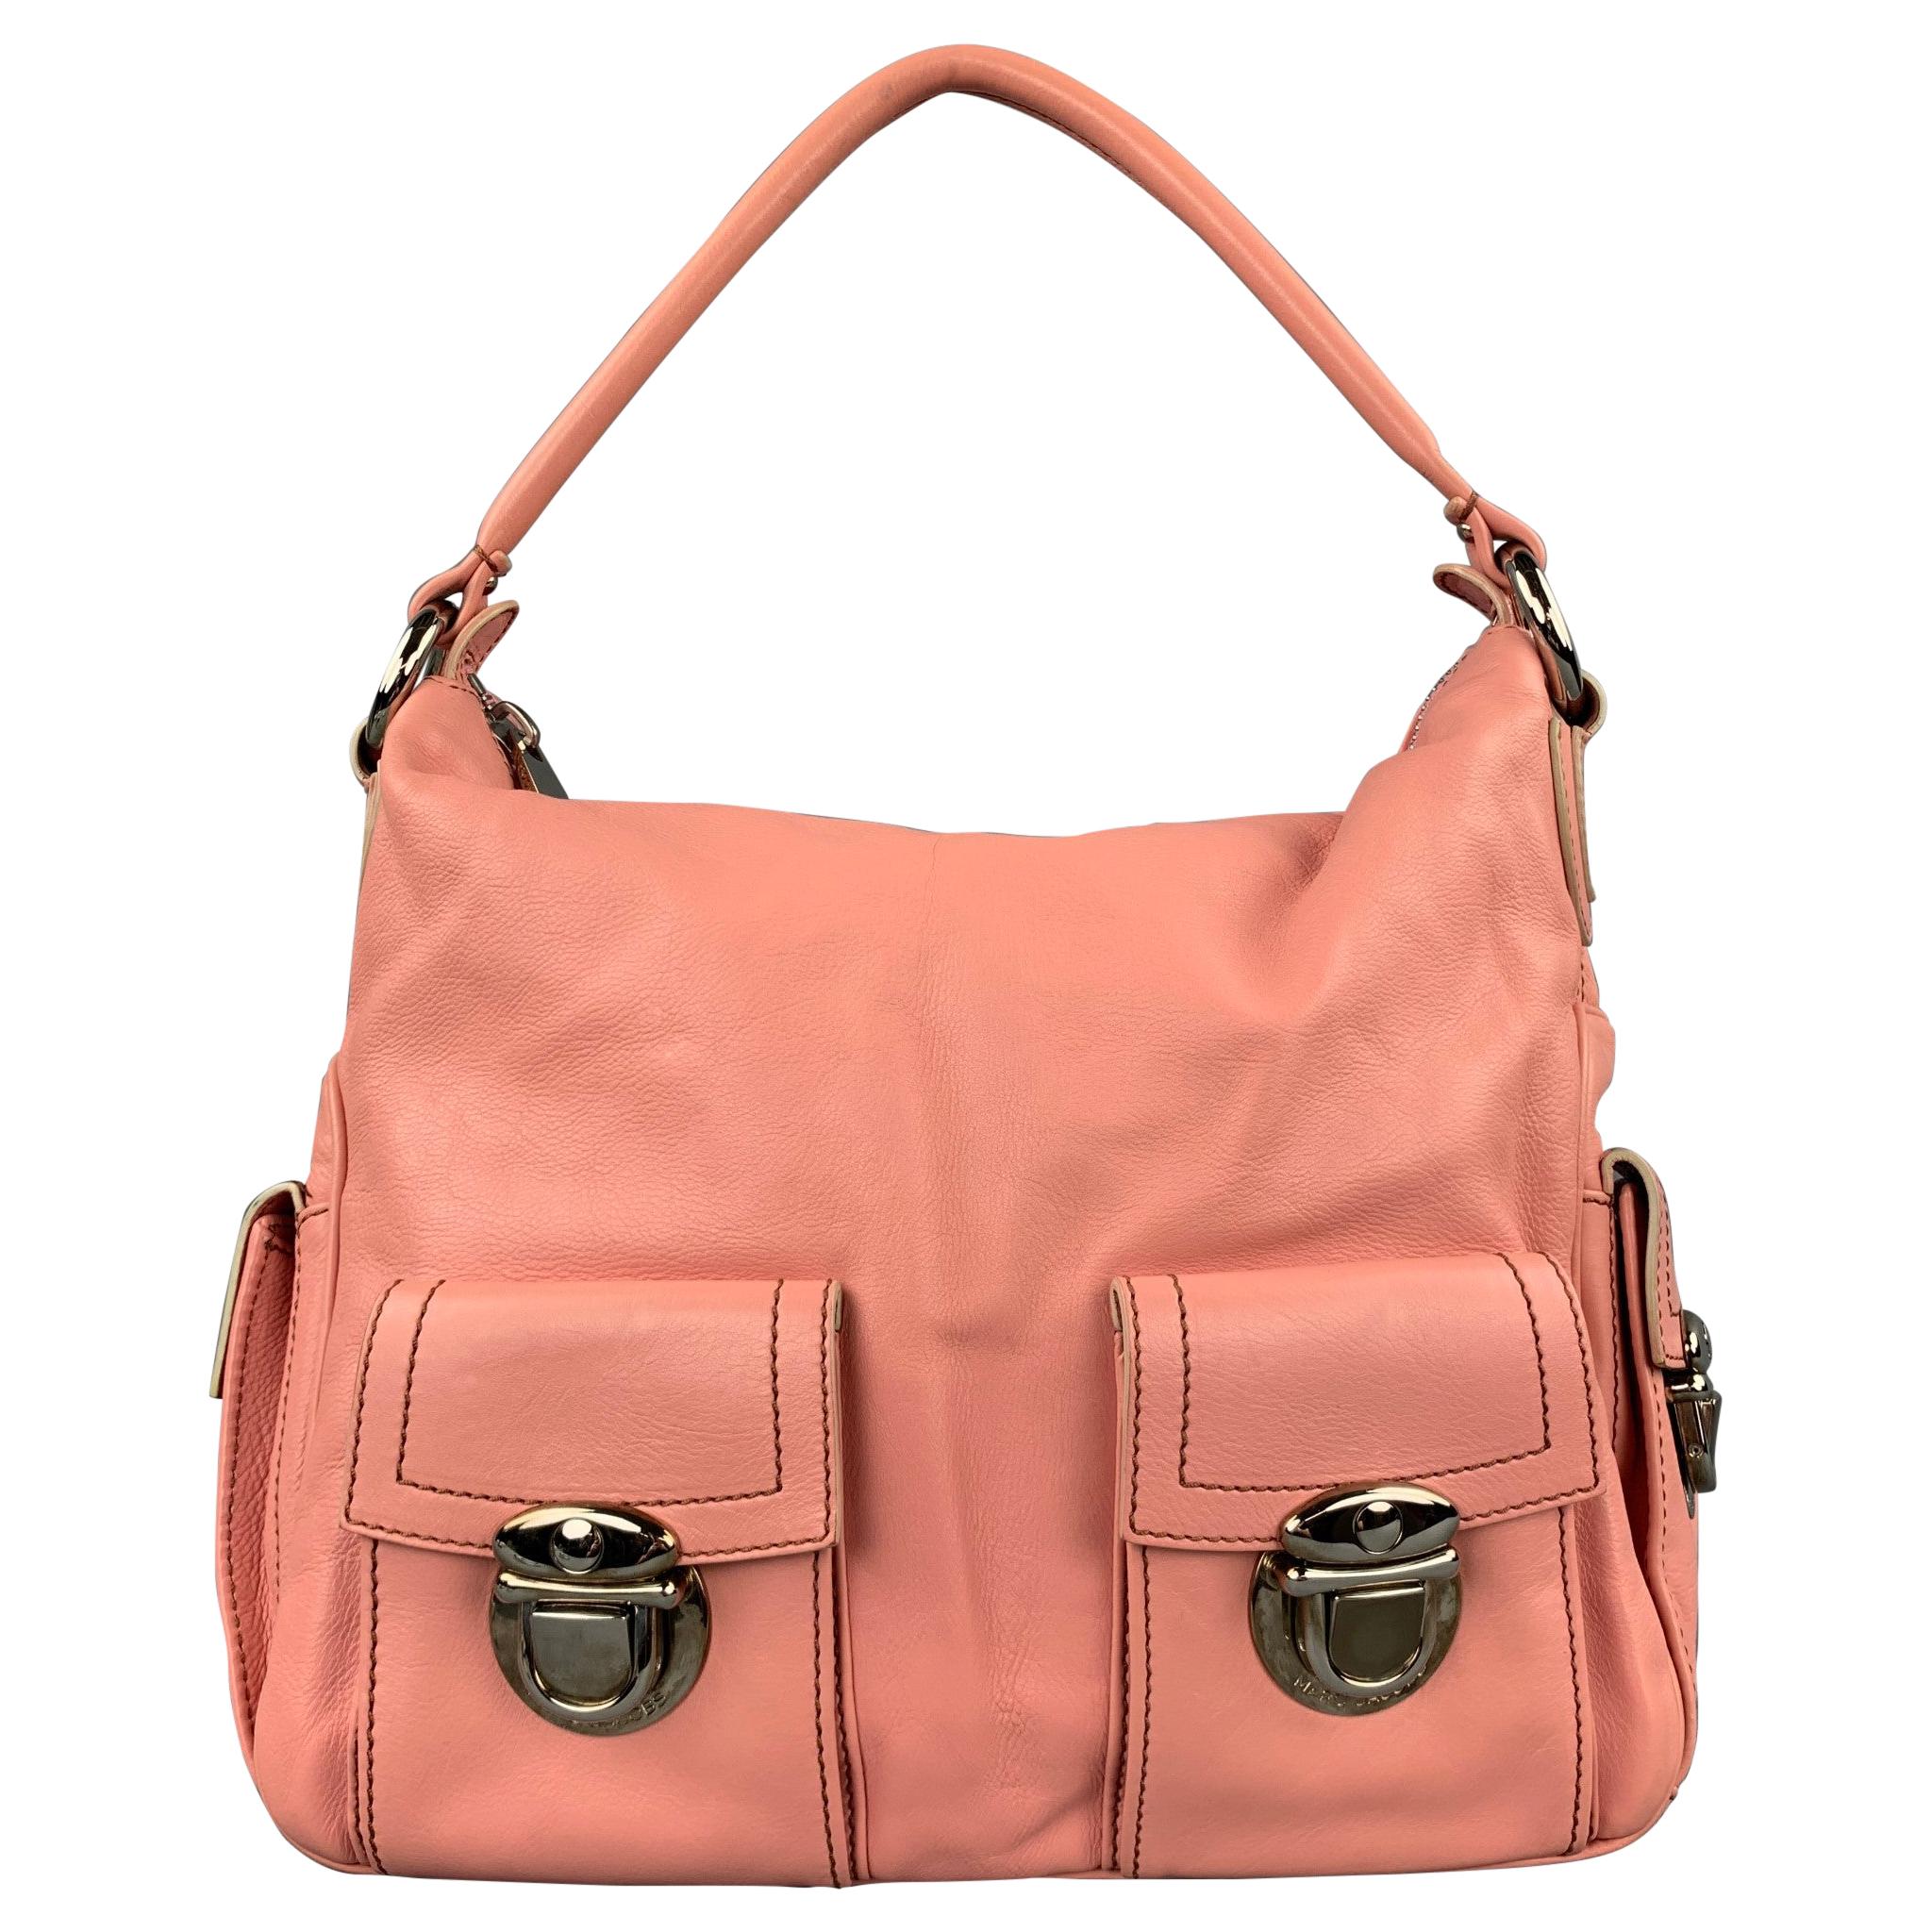 MARC JACOBS Pink Contrast Stitch Leather Top Handles Handbag